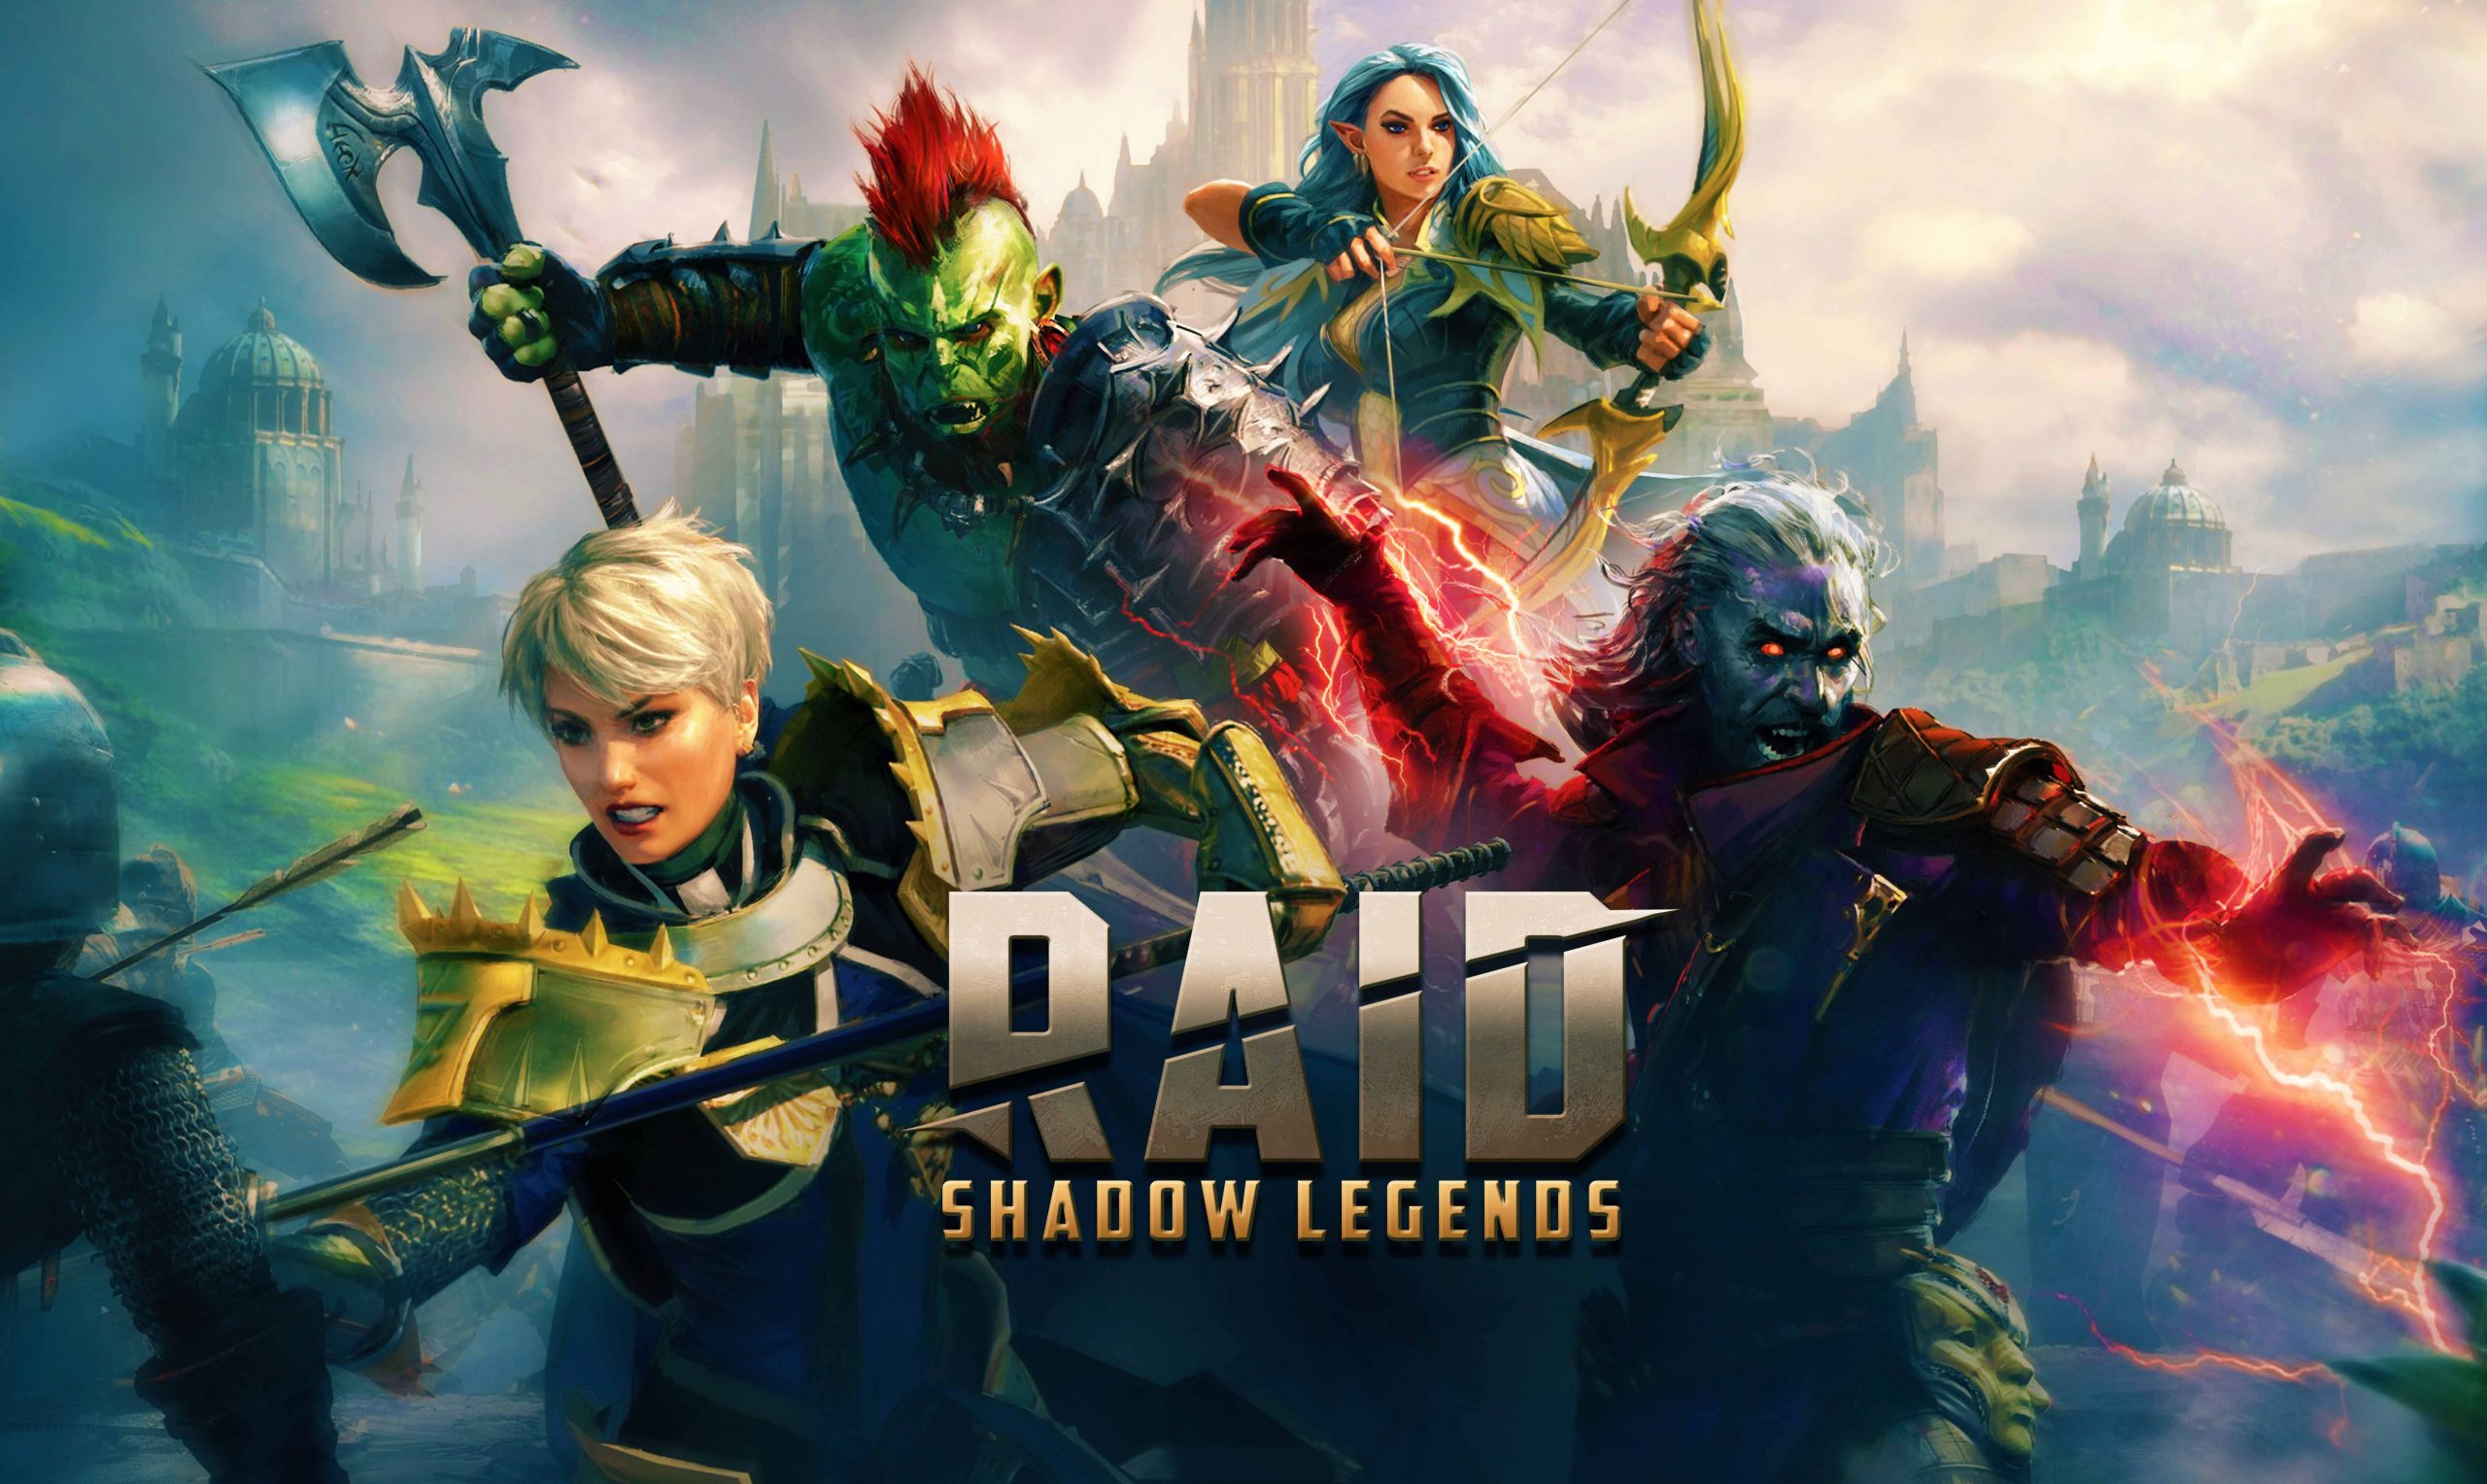 raid shadow legends promo code 2020